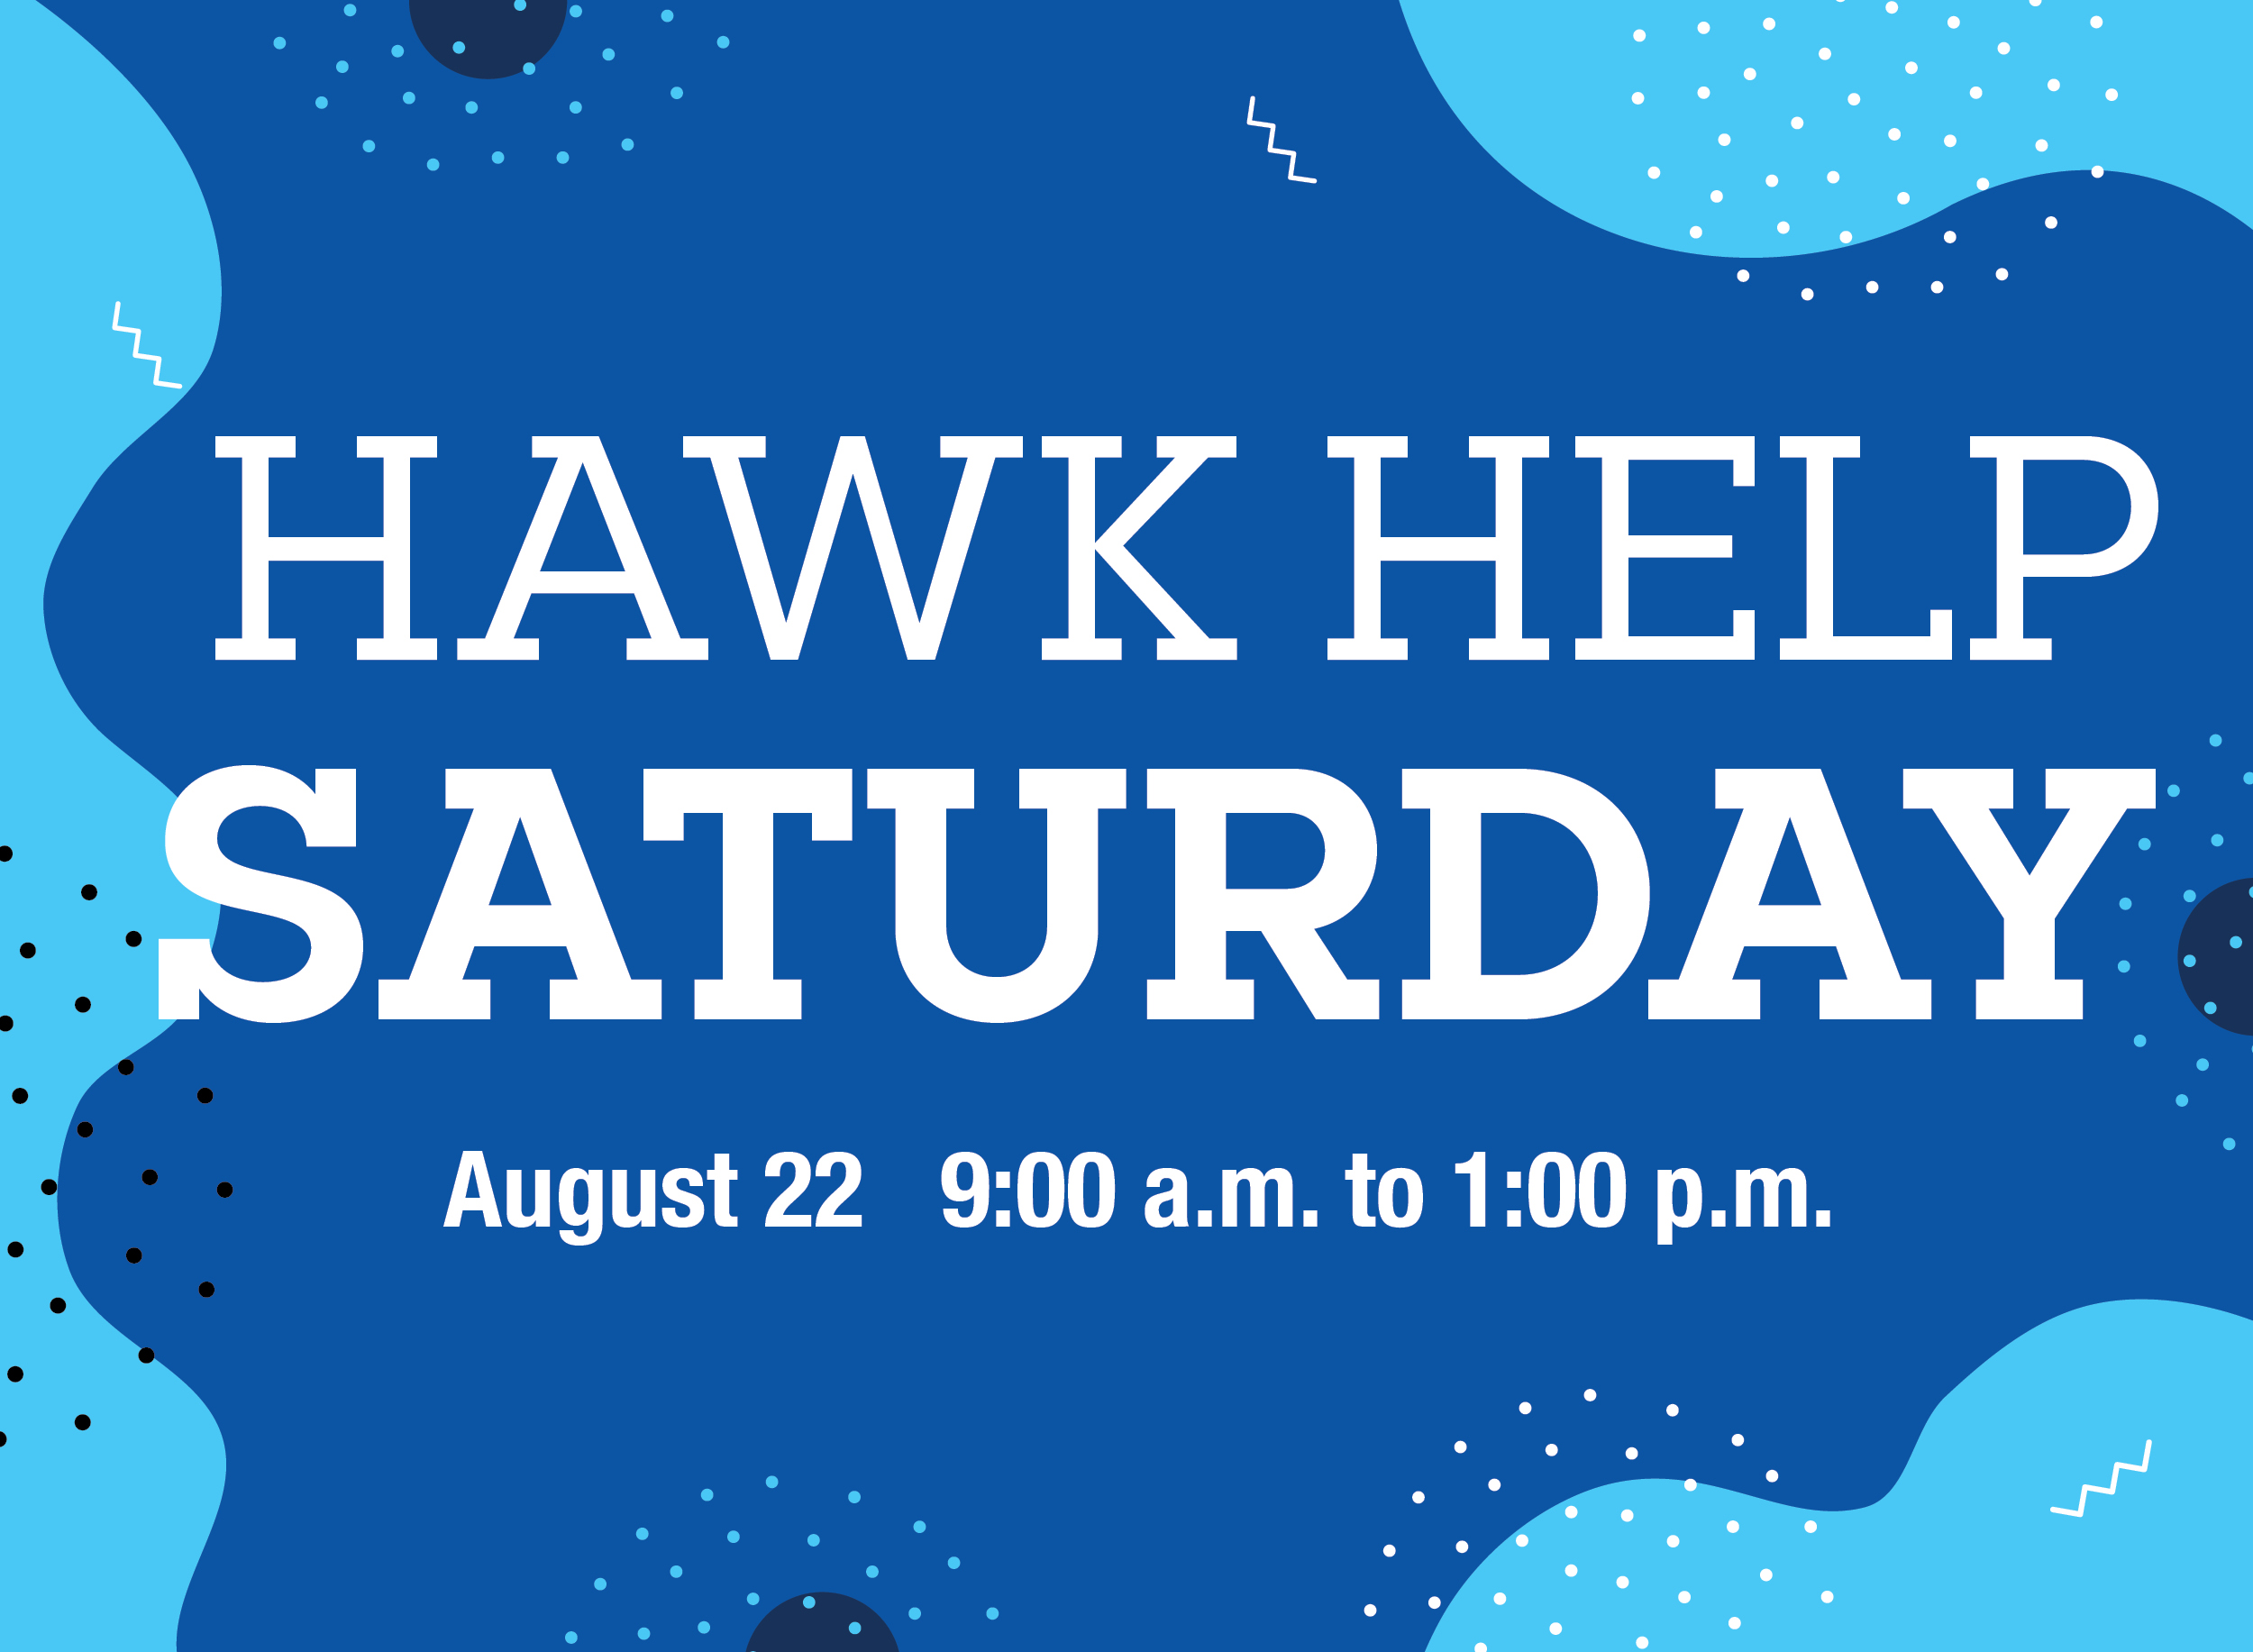 Hawk Help Saturday stylized graphic